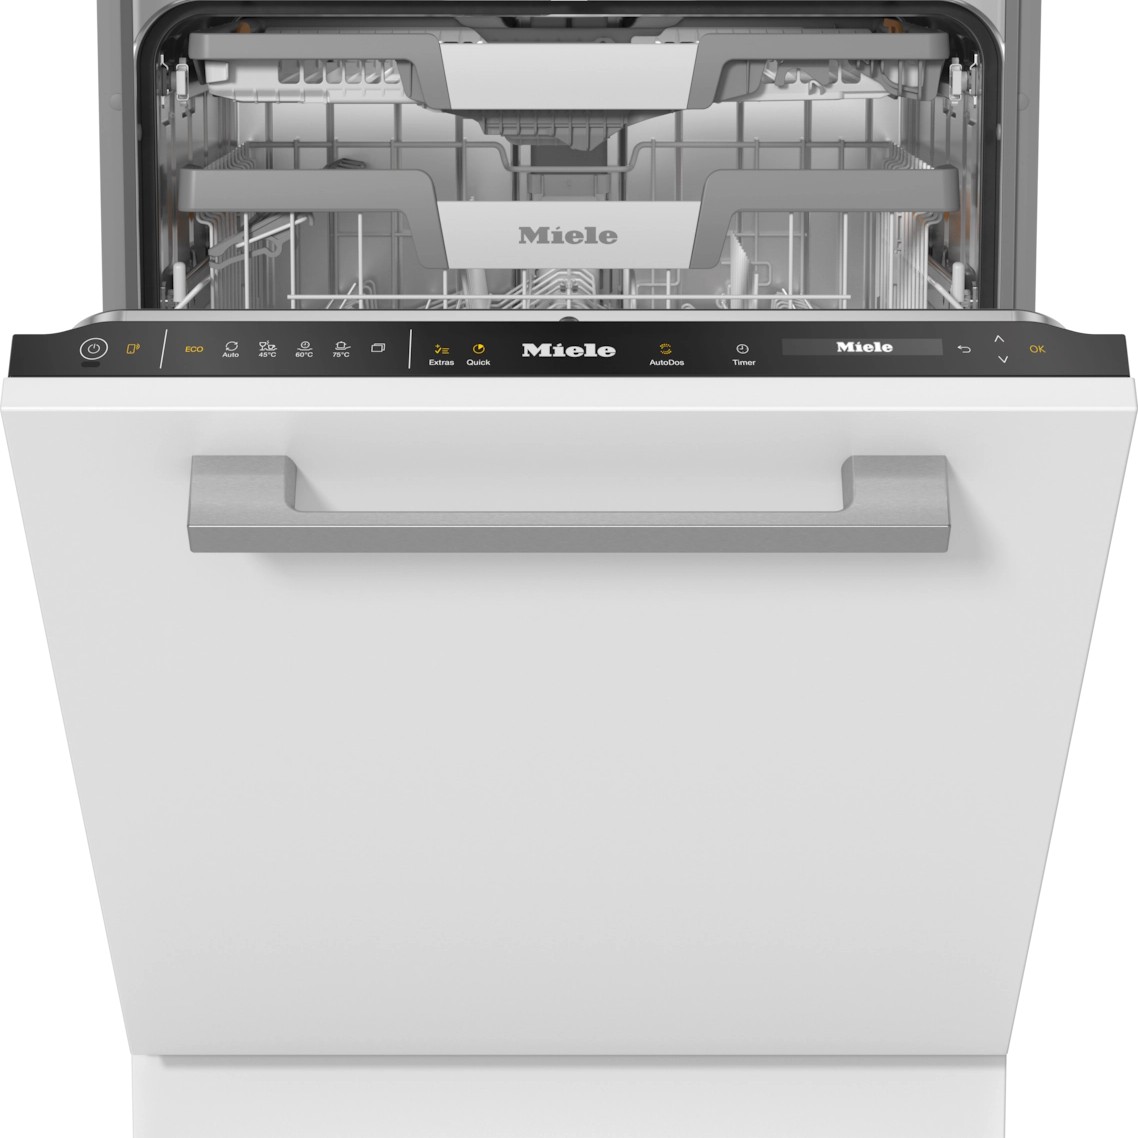 Встраиваемая посудомоечная машина Miele G 7650 SCVi встраиваемая посудомоечная машина miele g5481 scvi